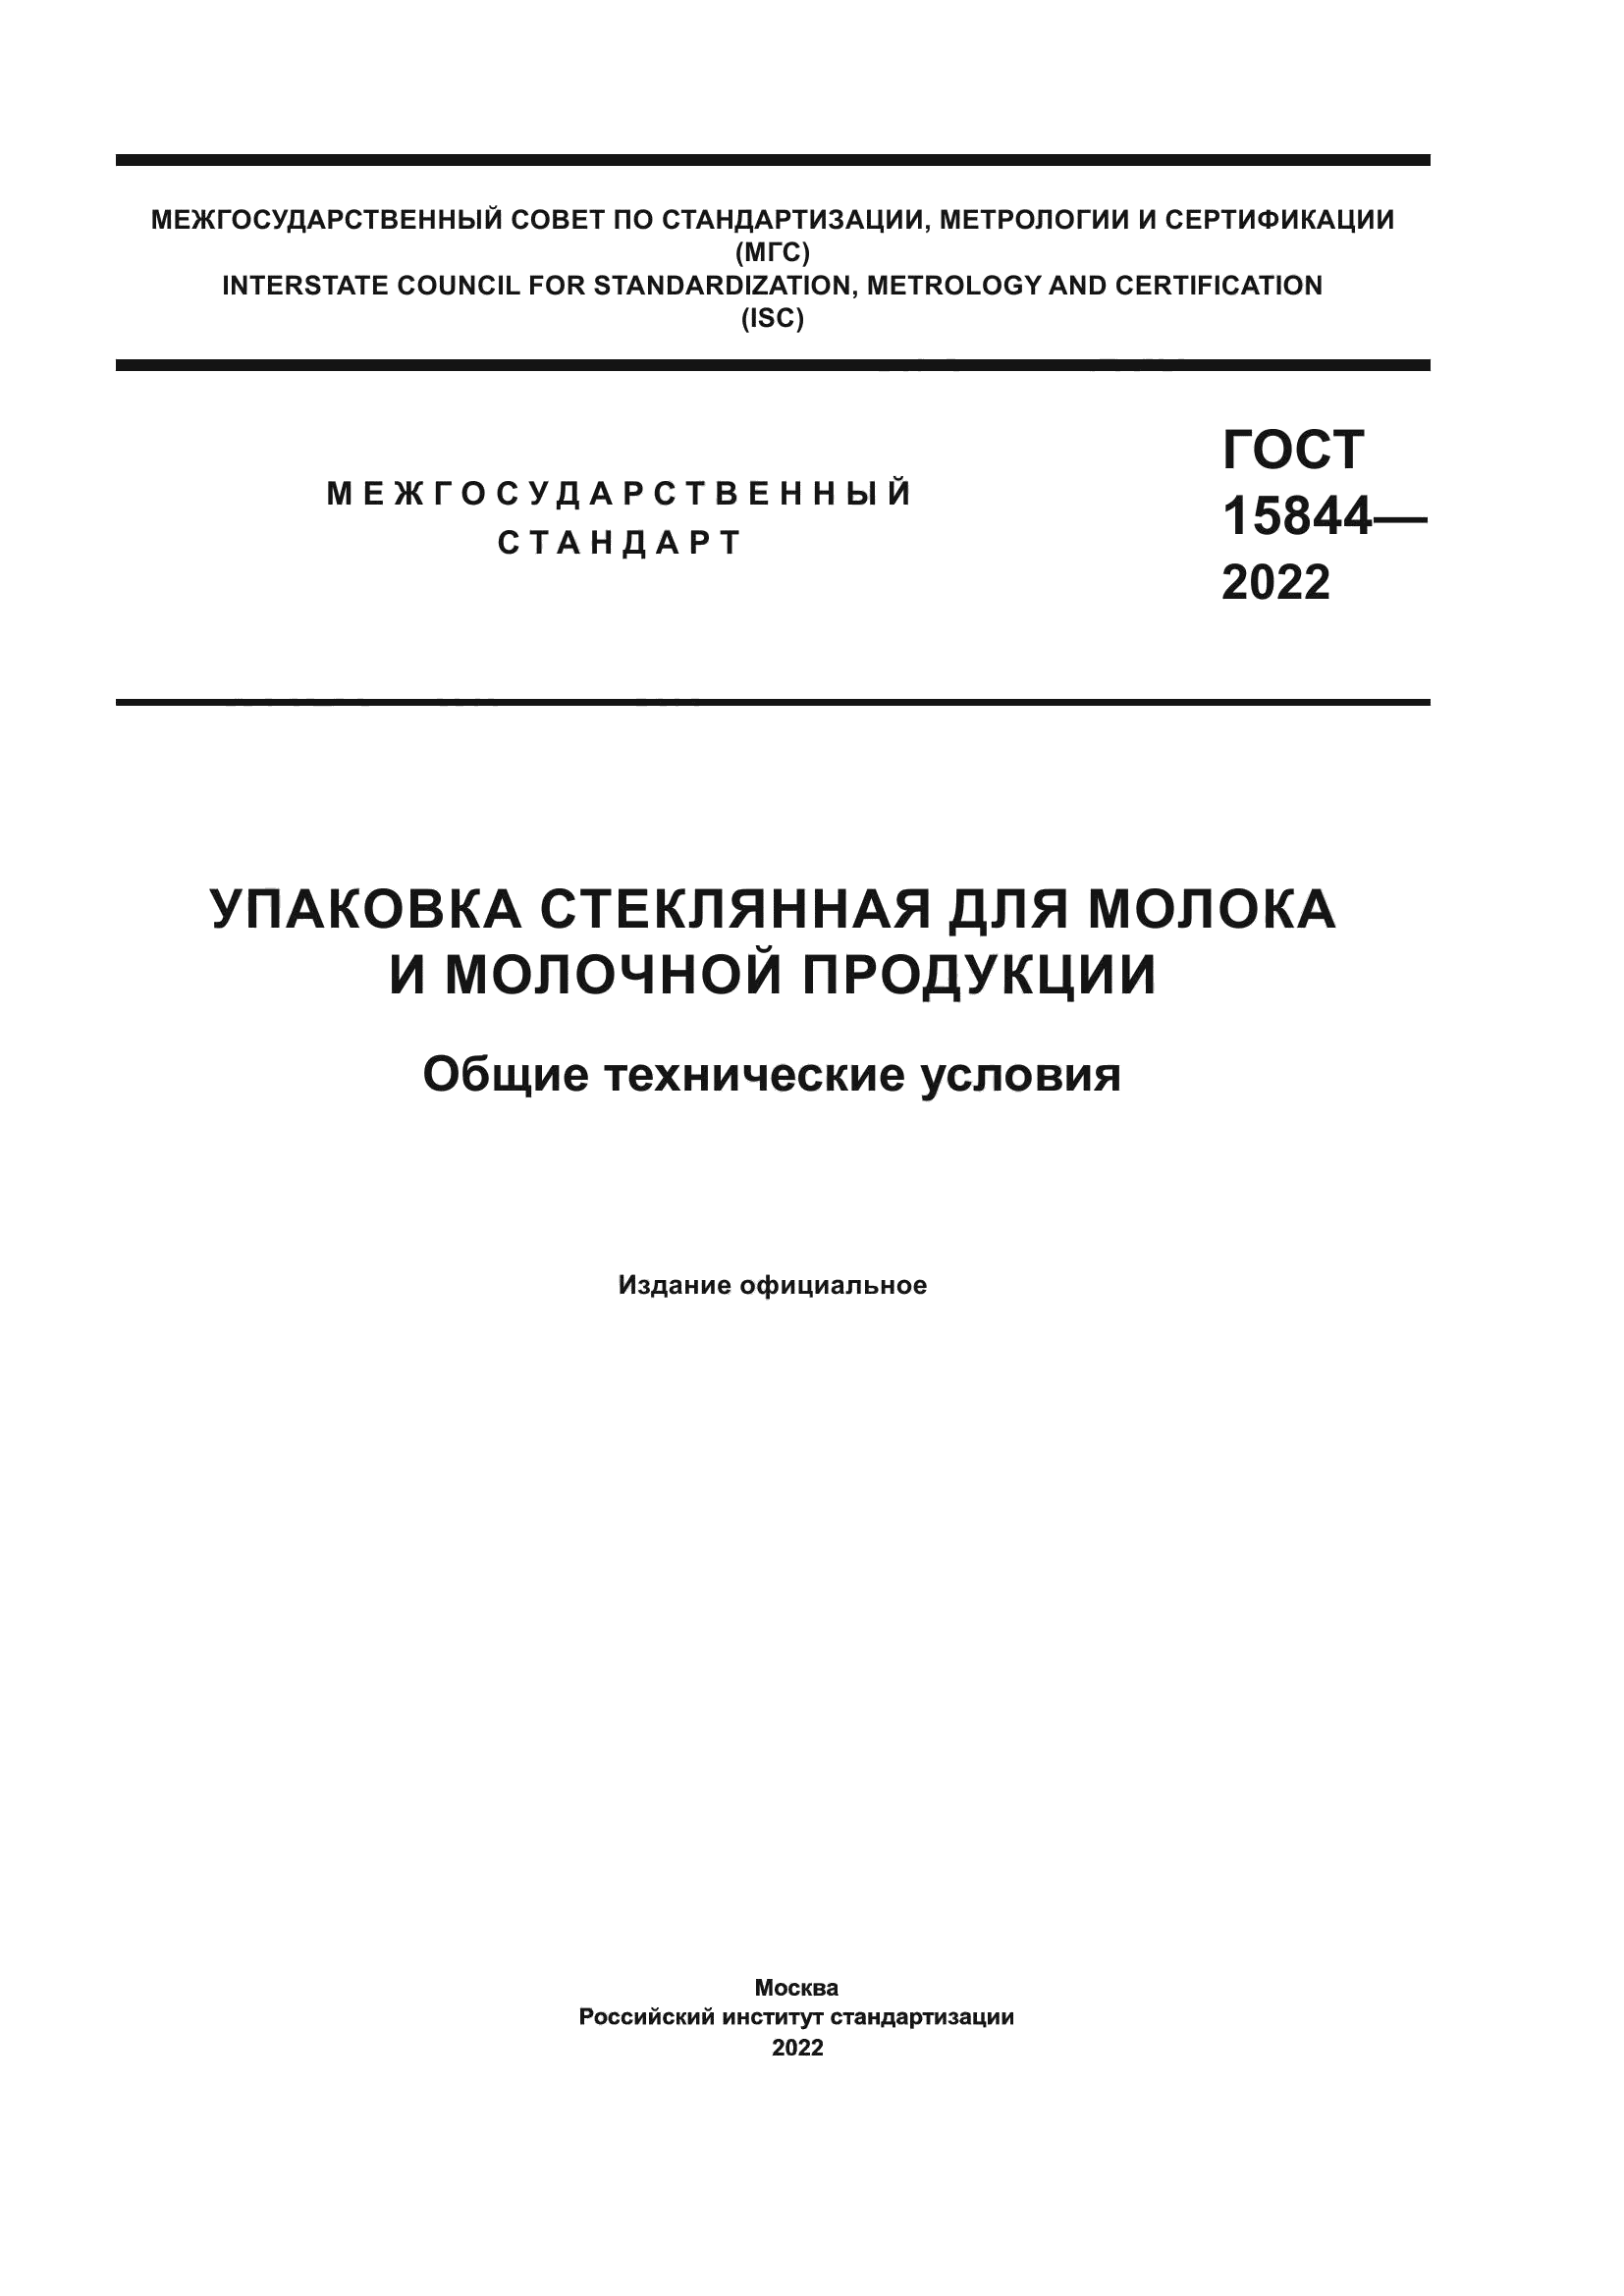 ГОСТ 15844-2022